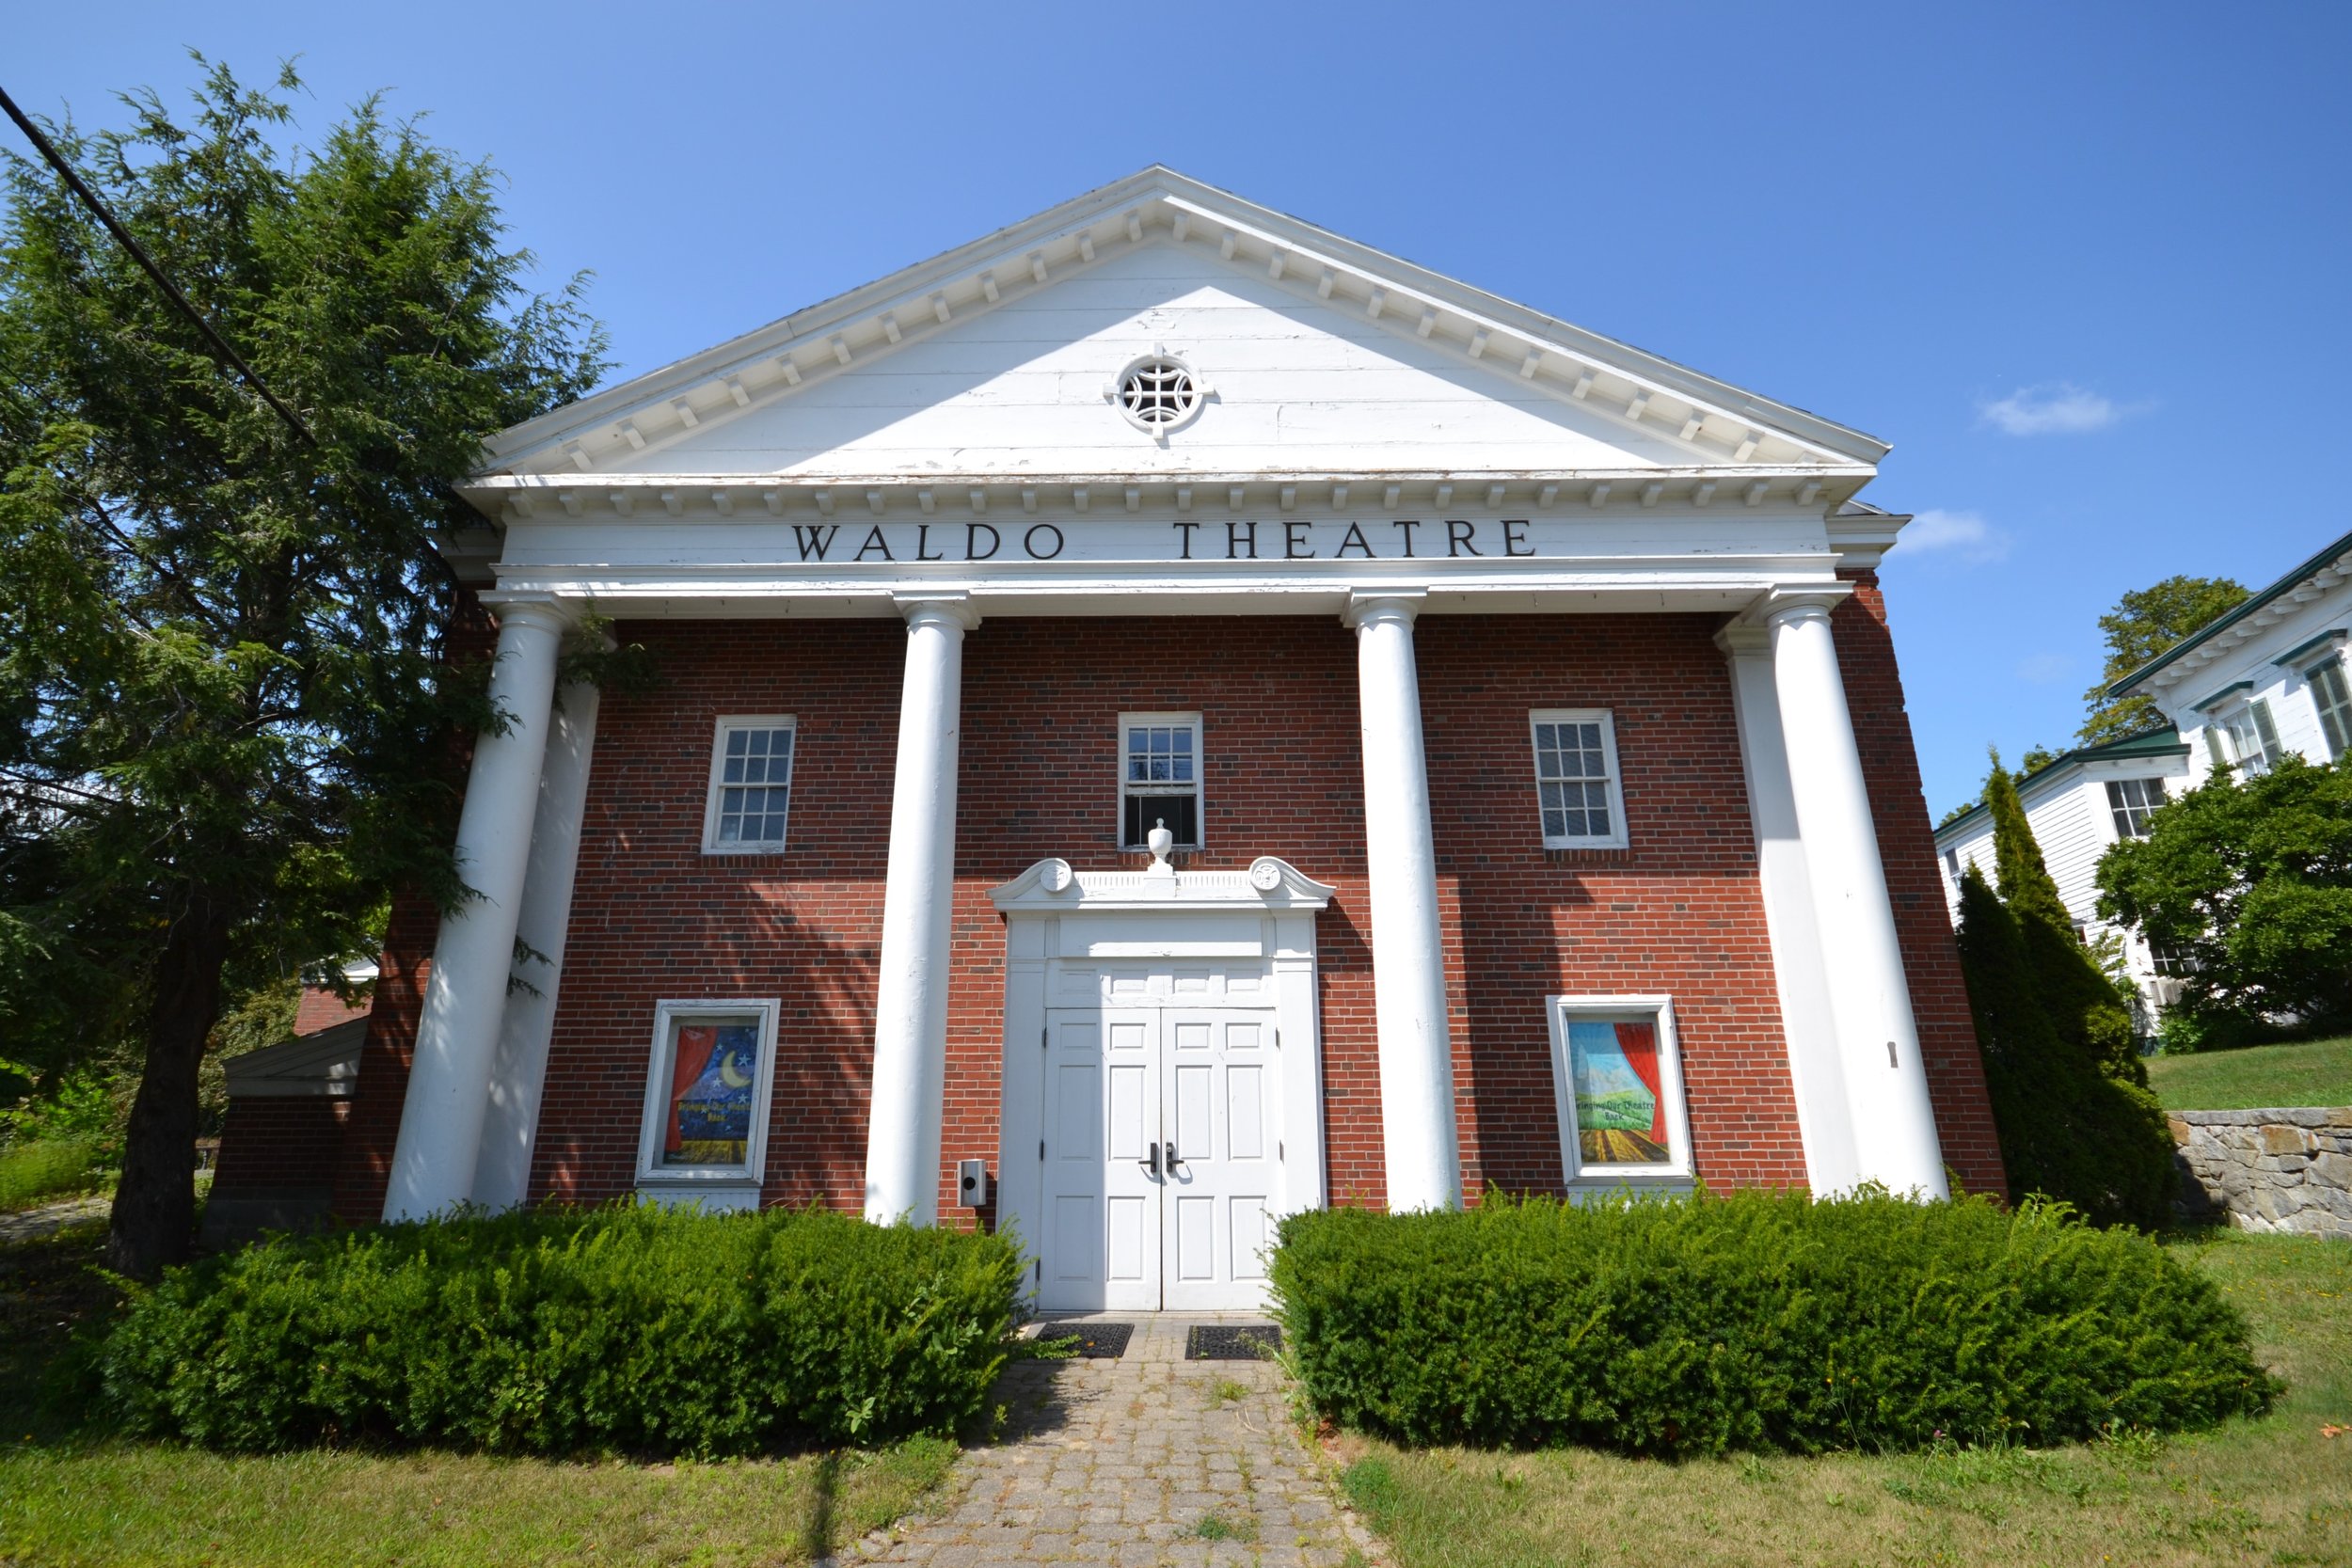 The Waldo Theatre, Waldoboro